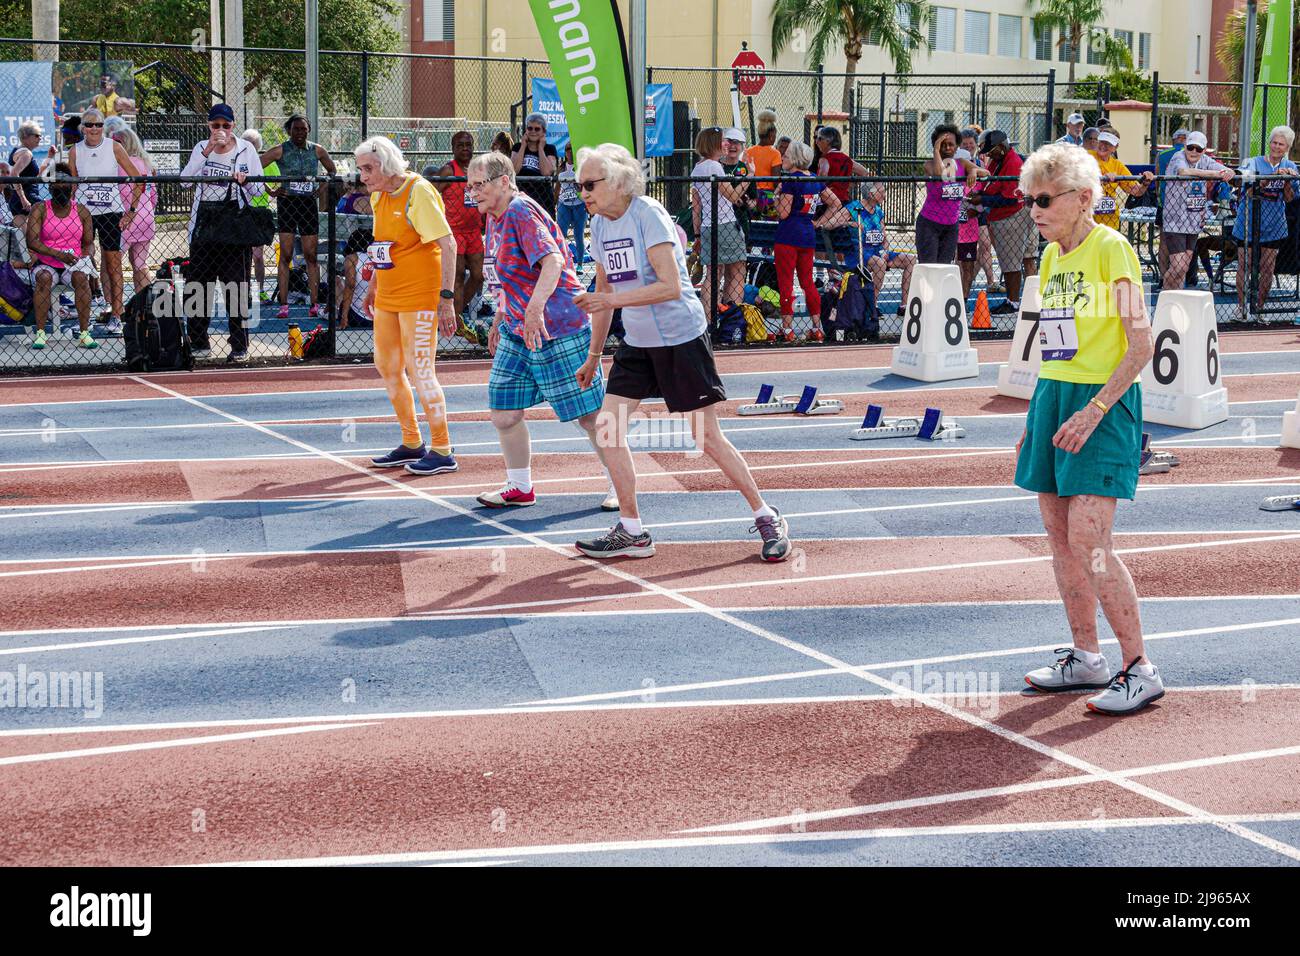 Fort Ft. Lauderdale Florida, Ansin Sports Complex Track & Field National Senior Games, mujeres mayores corredores competidores mujeres hace 90 años y más,sta Foto de stock